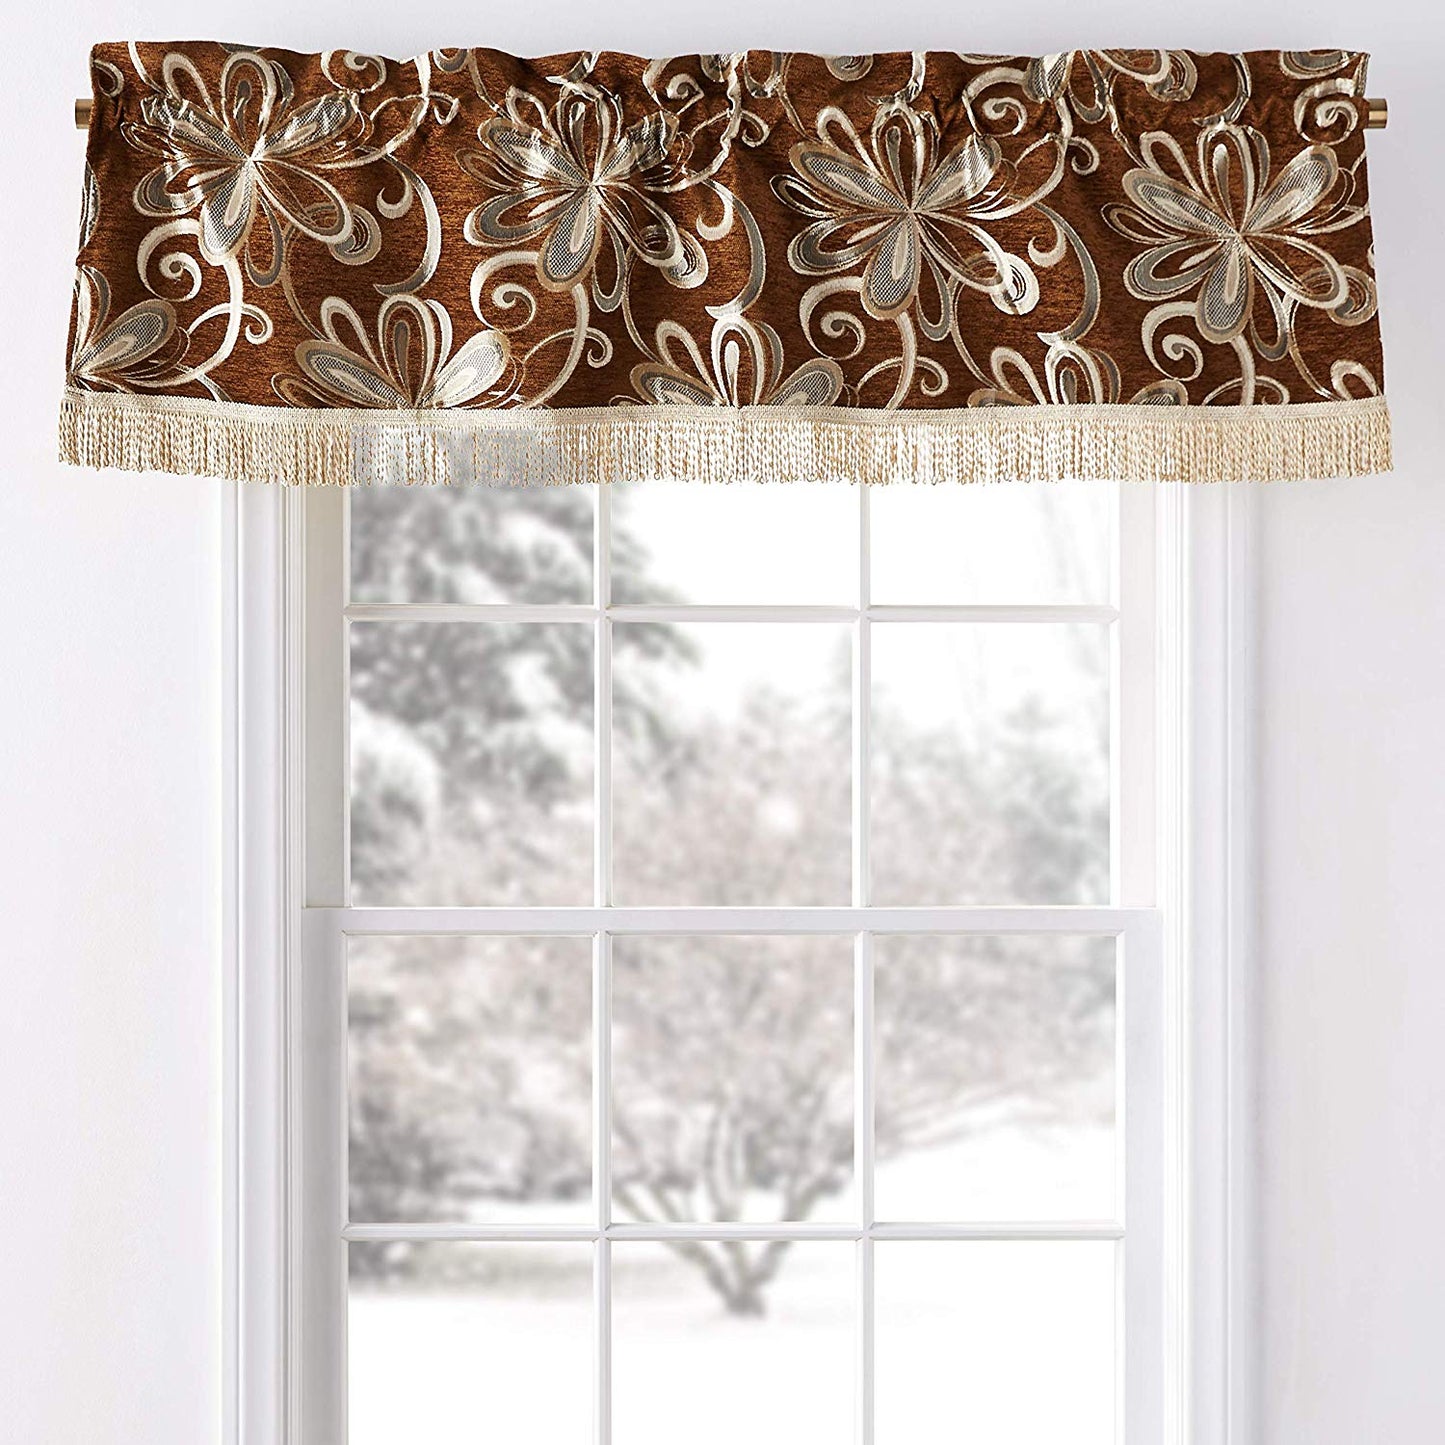 Chenille Chateau Vintage Floral Design Decorative Window Treatment Rod Pocket Curtain Straight Valance